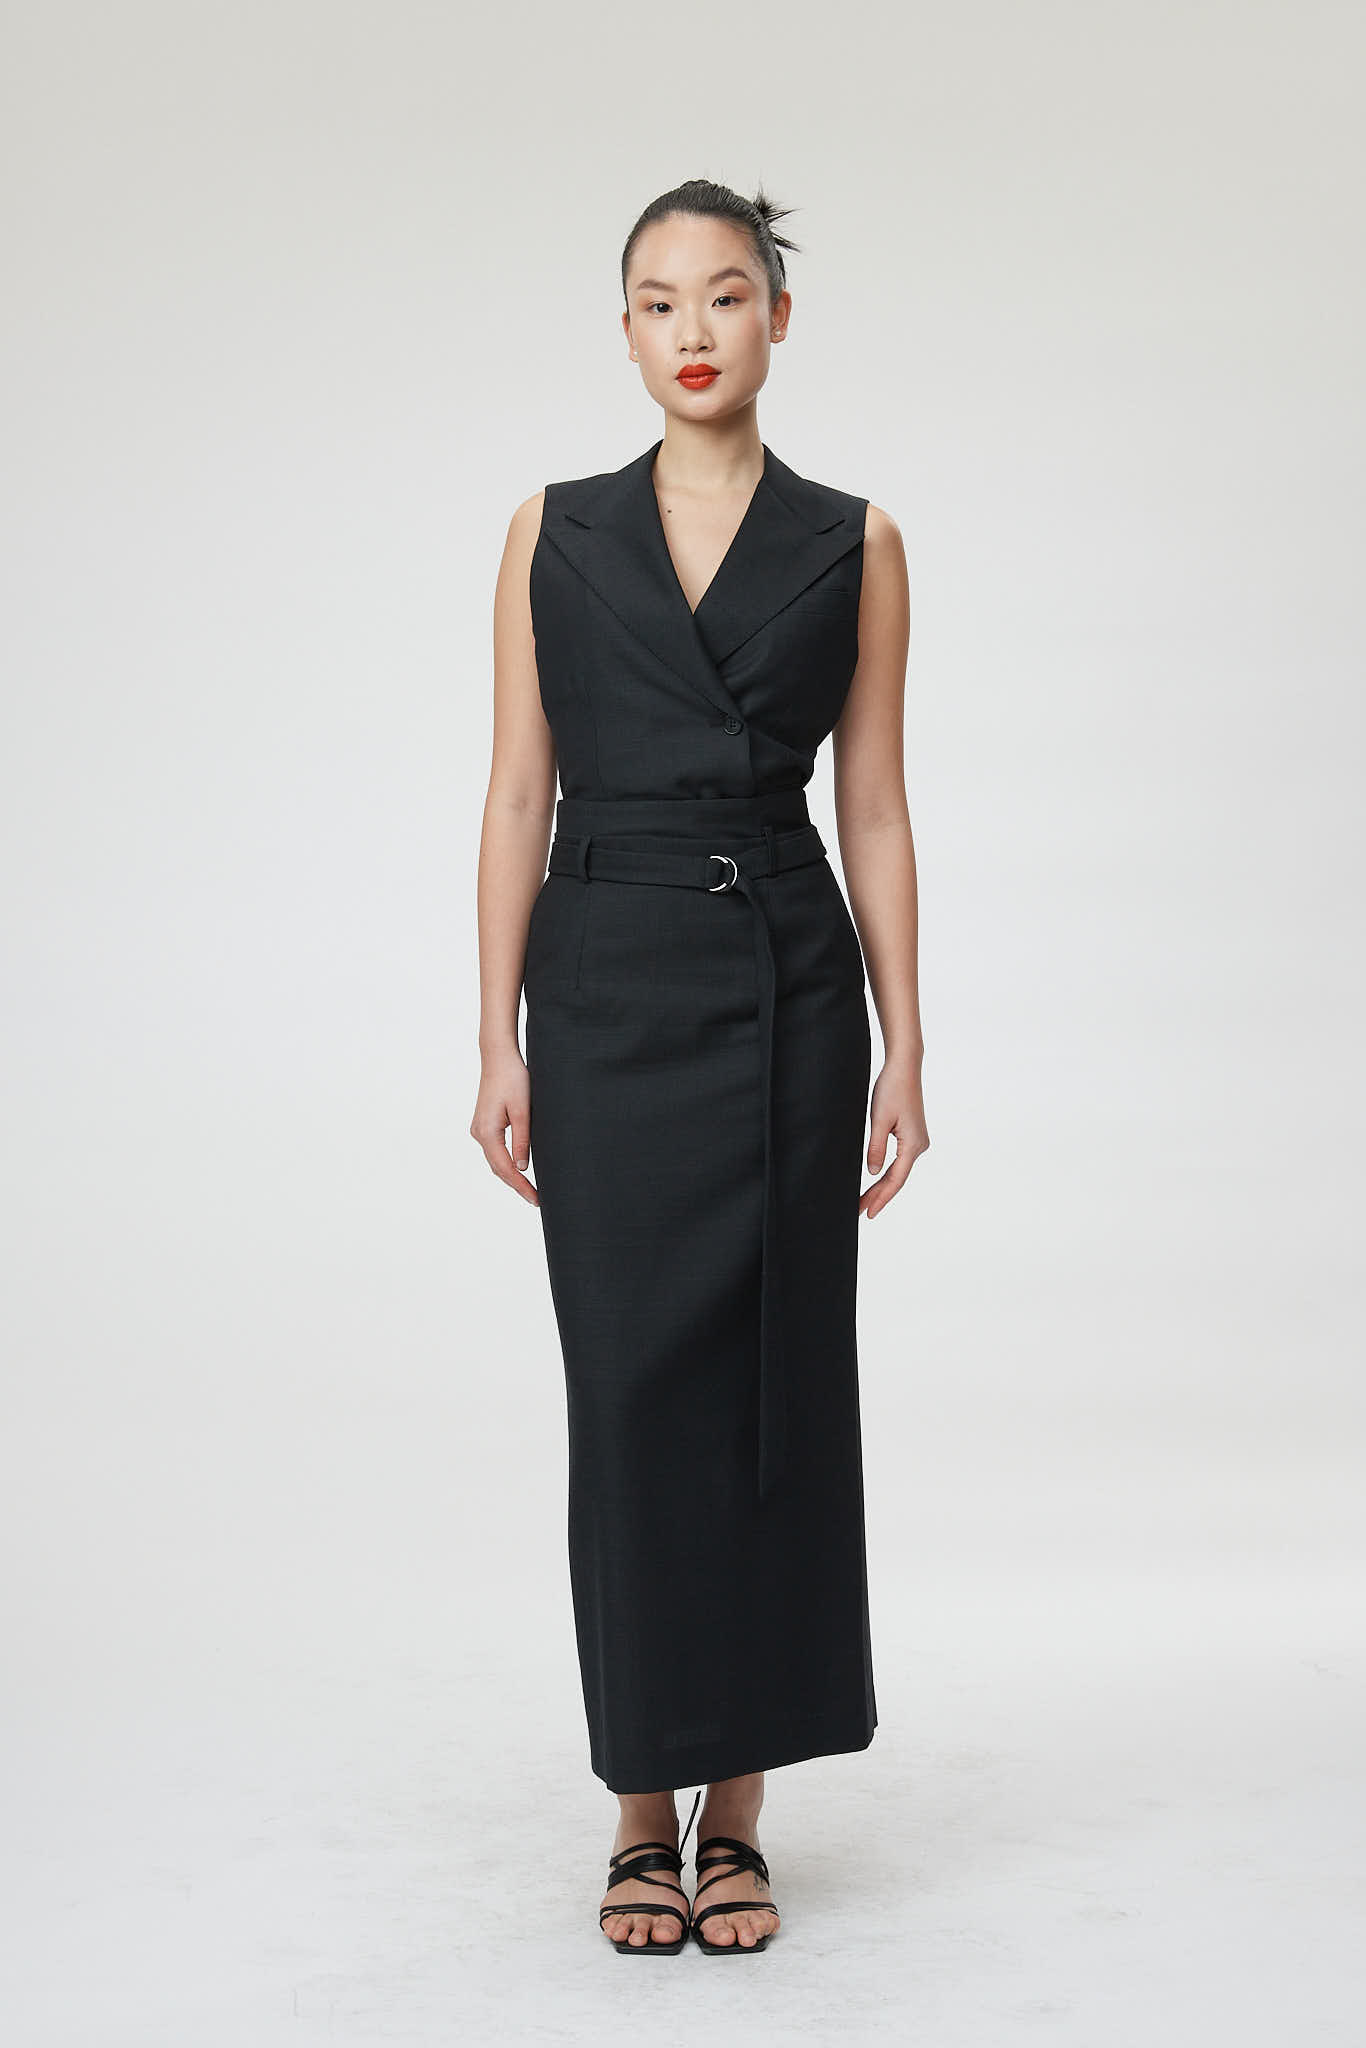 Florence Skirt – Maxi pencil skirt in black0